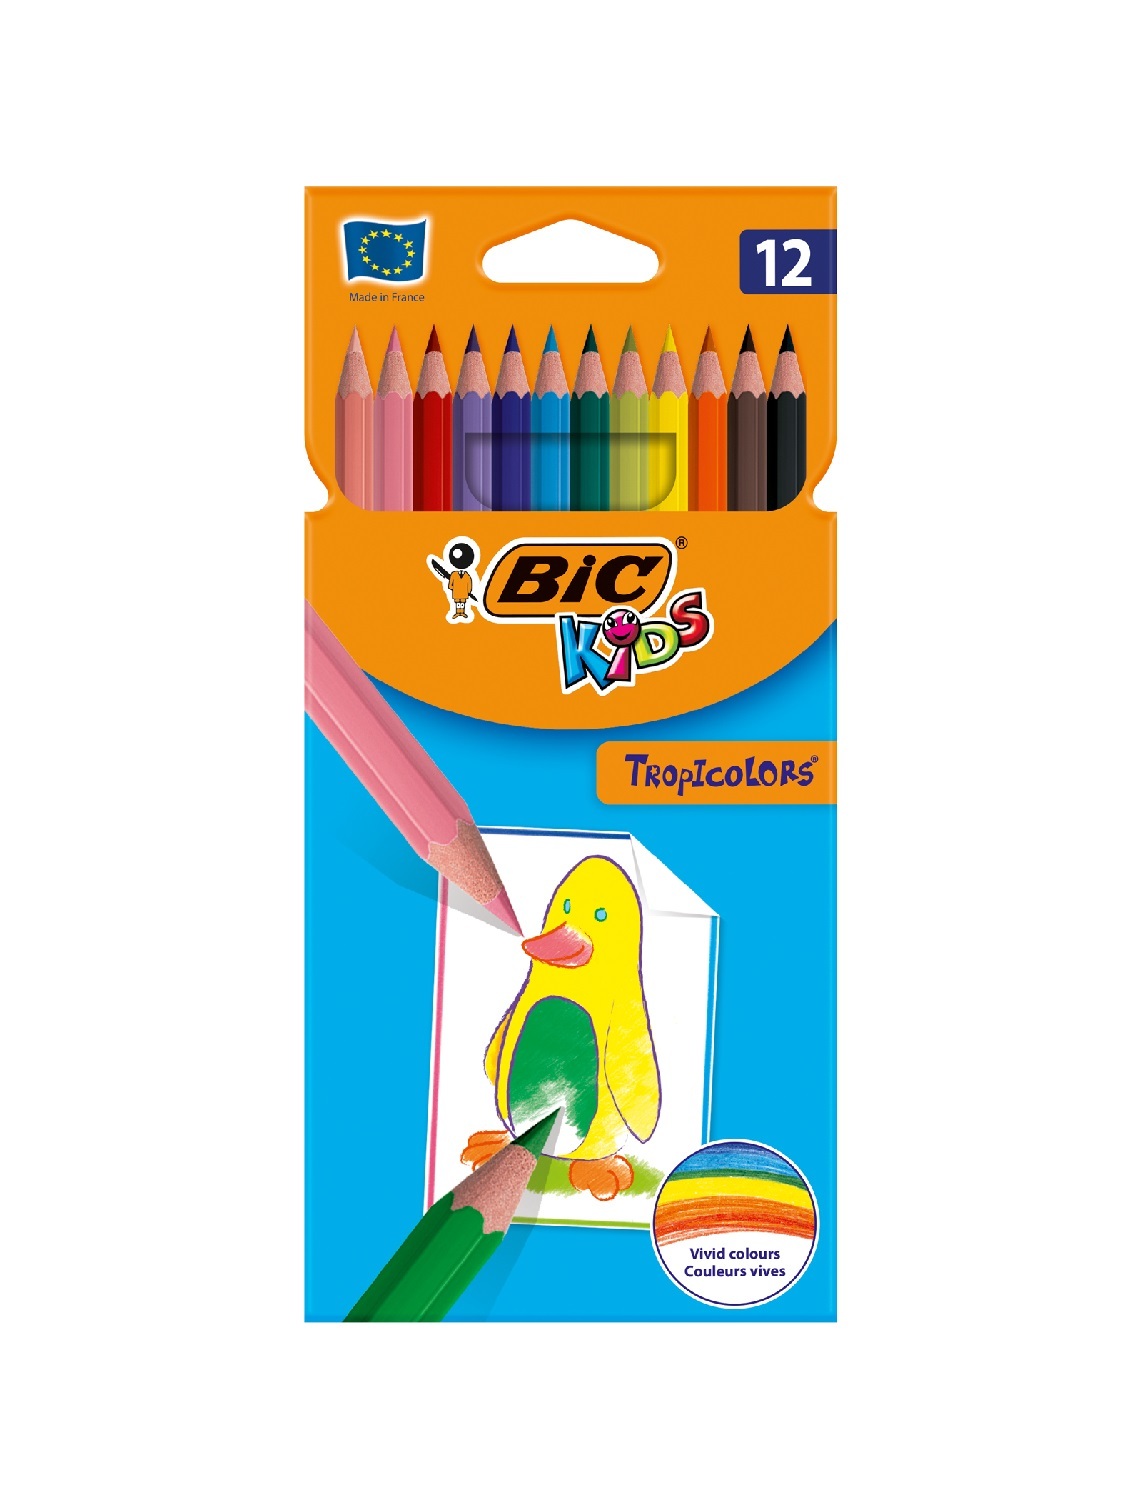 https://www.les-papeteries.be/42664/crayons-de-couleur-bic-kids-tropicolors-2.jpg